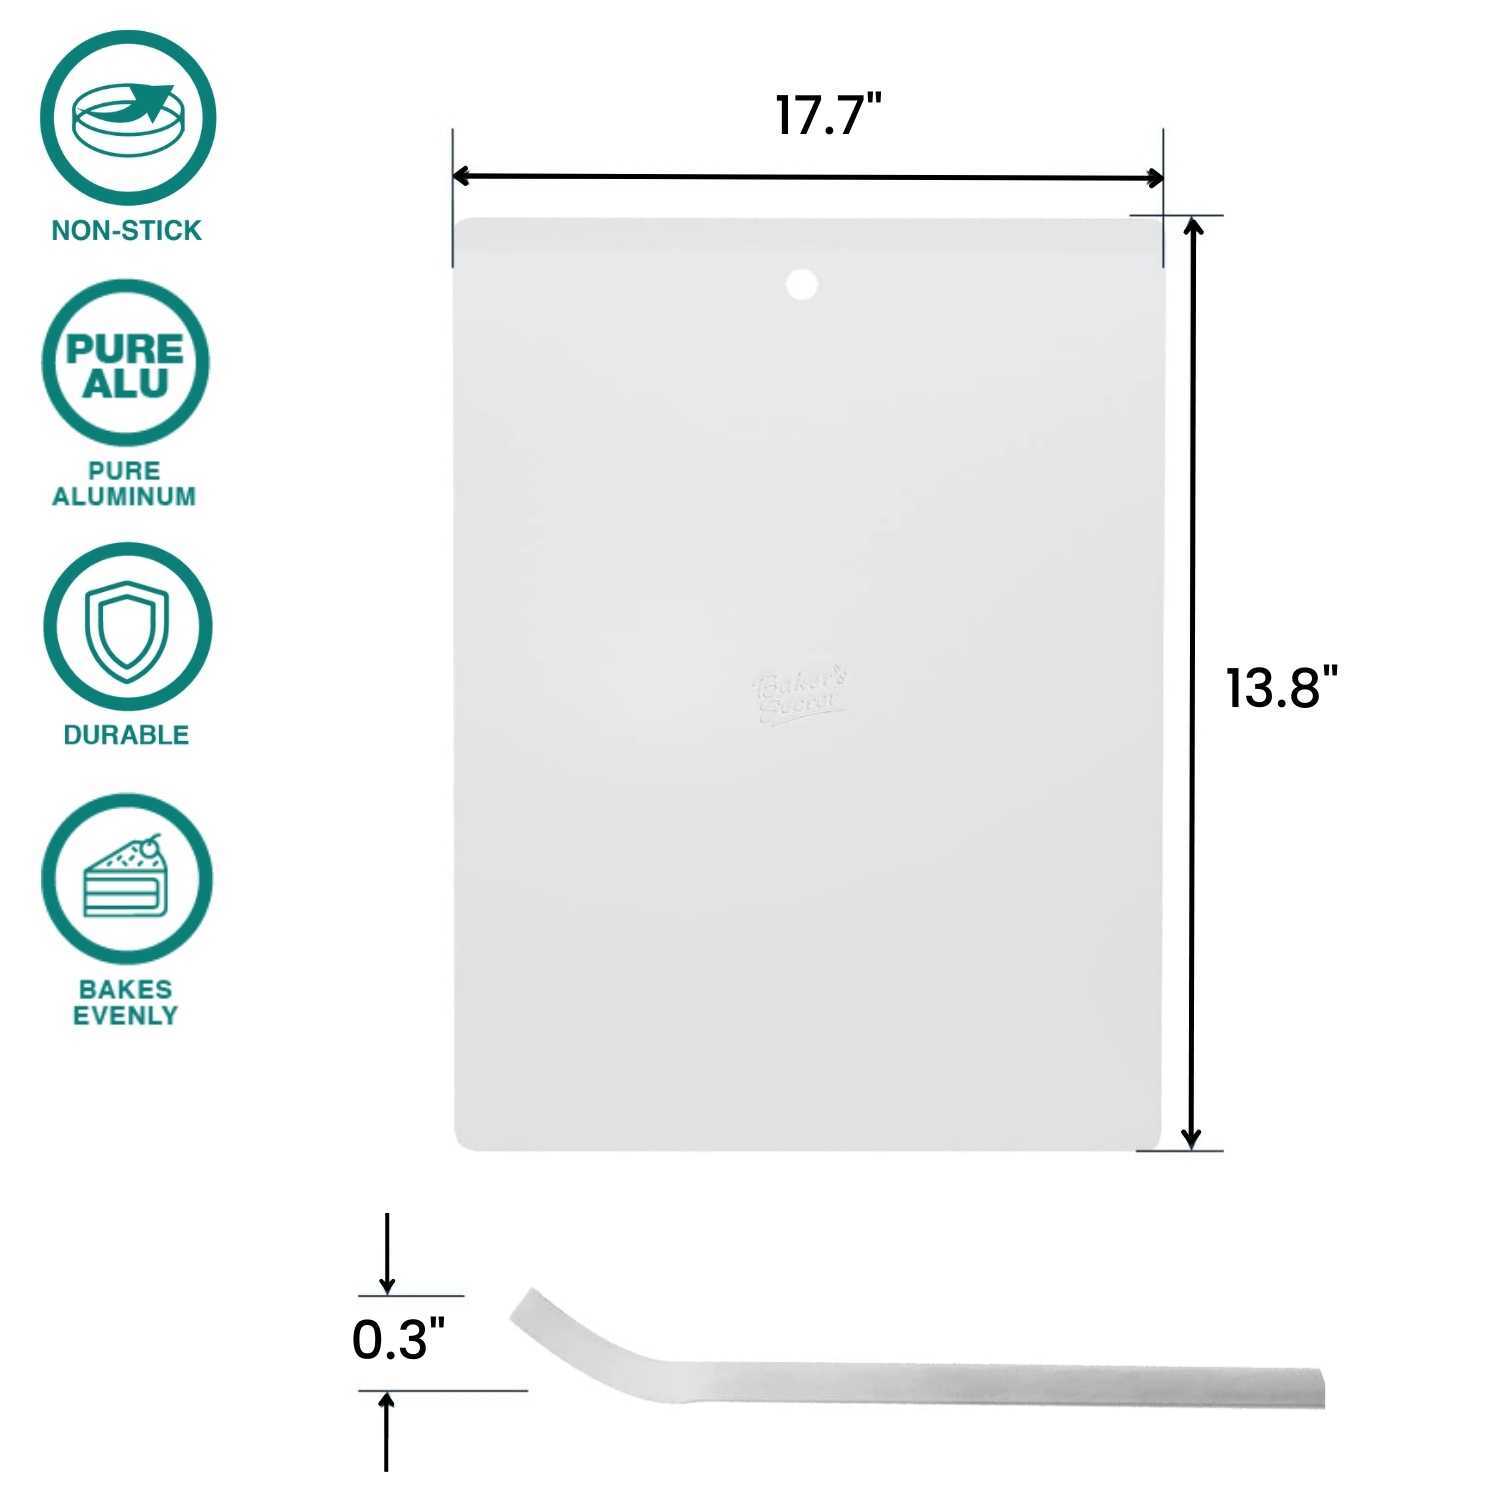 Commercial Grade Pure Aluminum Flat Cookie Sheet - 18” x 14”   - Baker's Secret